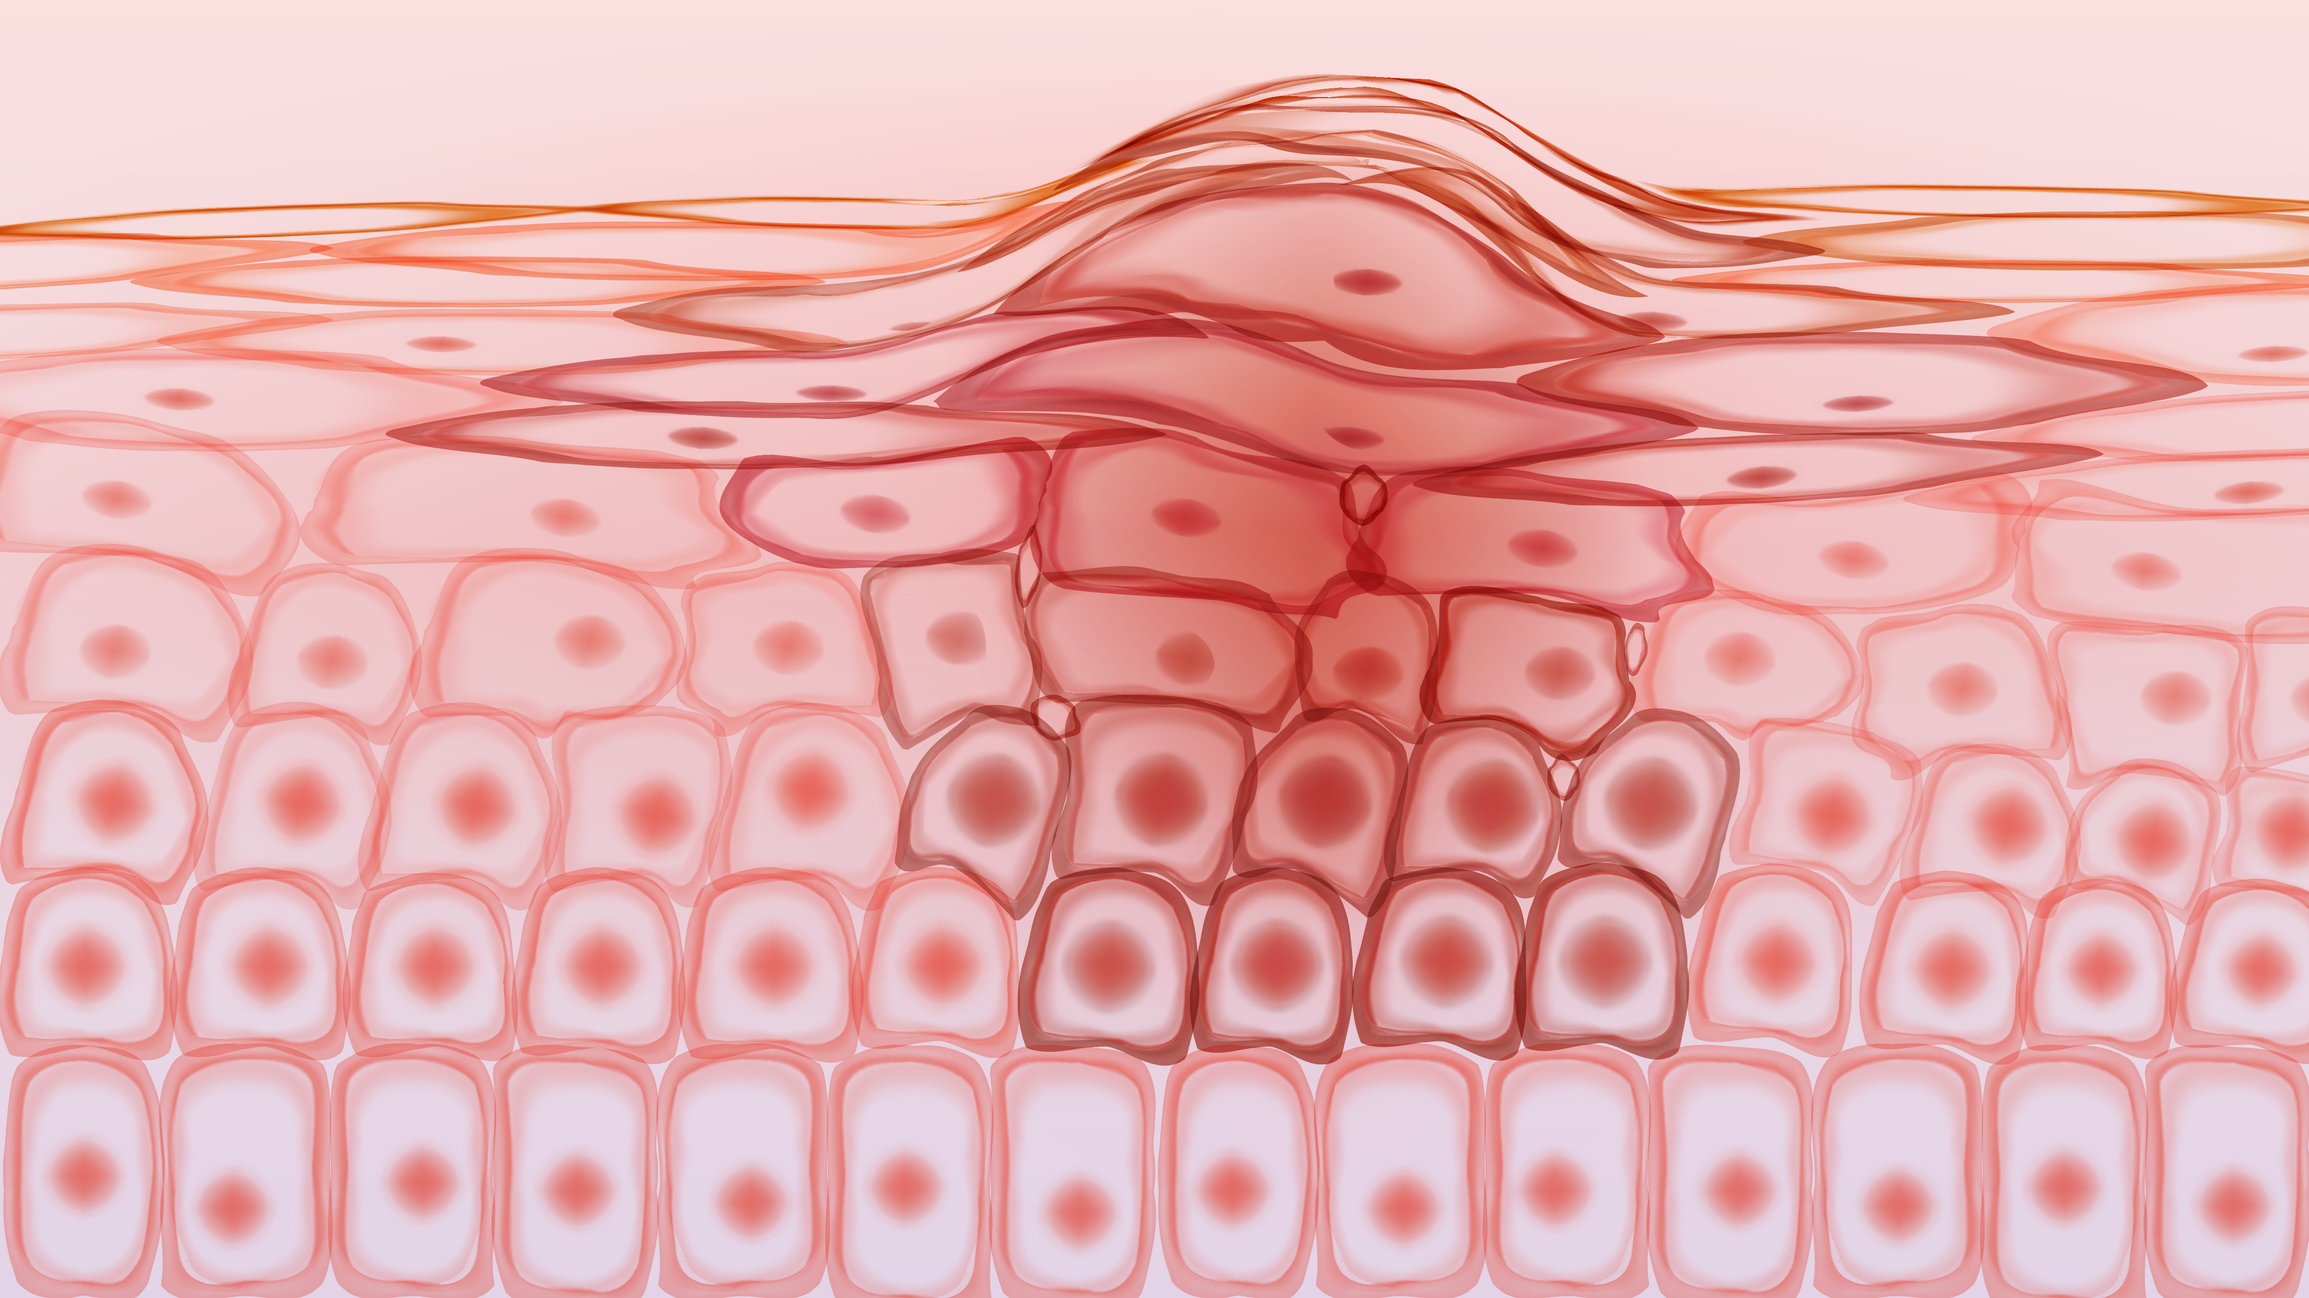 Skin tissue cancerous cells, melanoma stock illustration